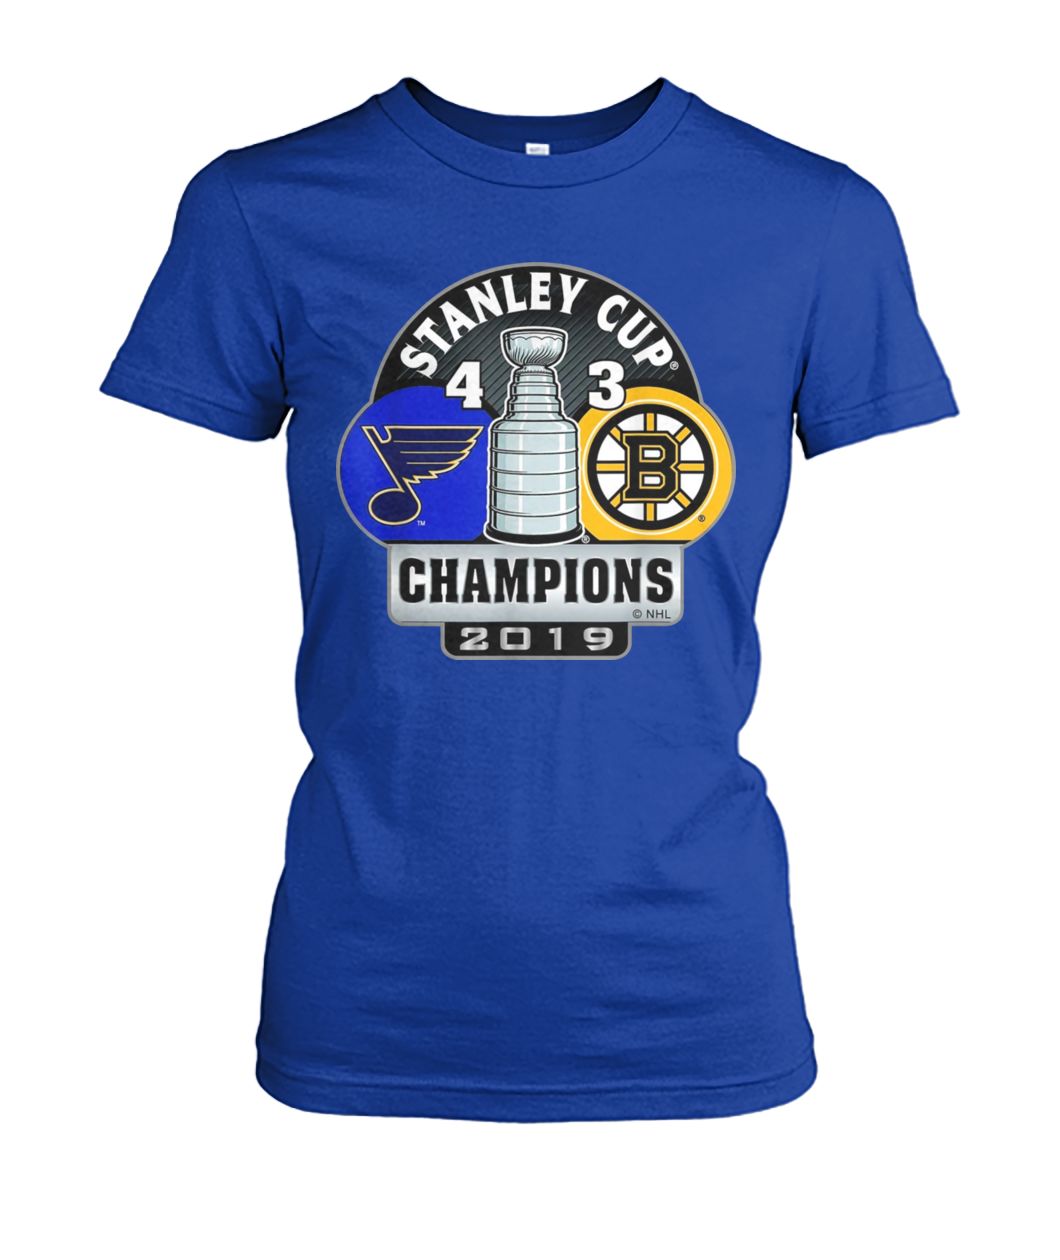 Stanley cup champions st louis blues 4 3 boston bruins 2019 women's crew tee